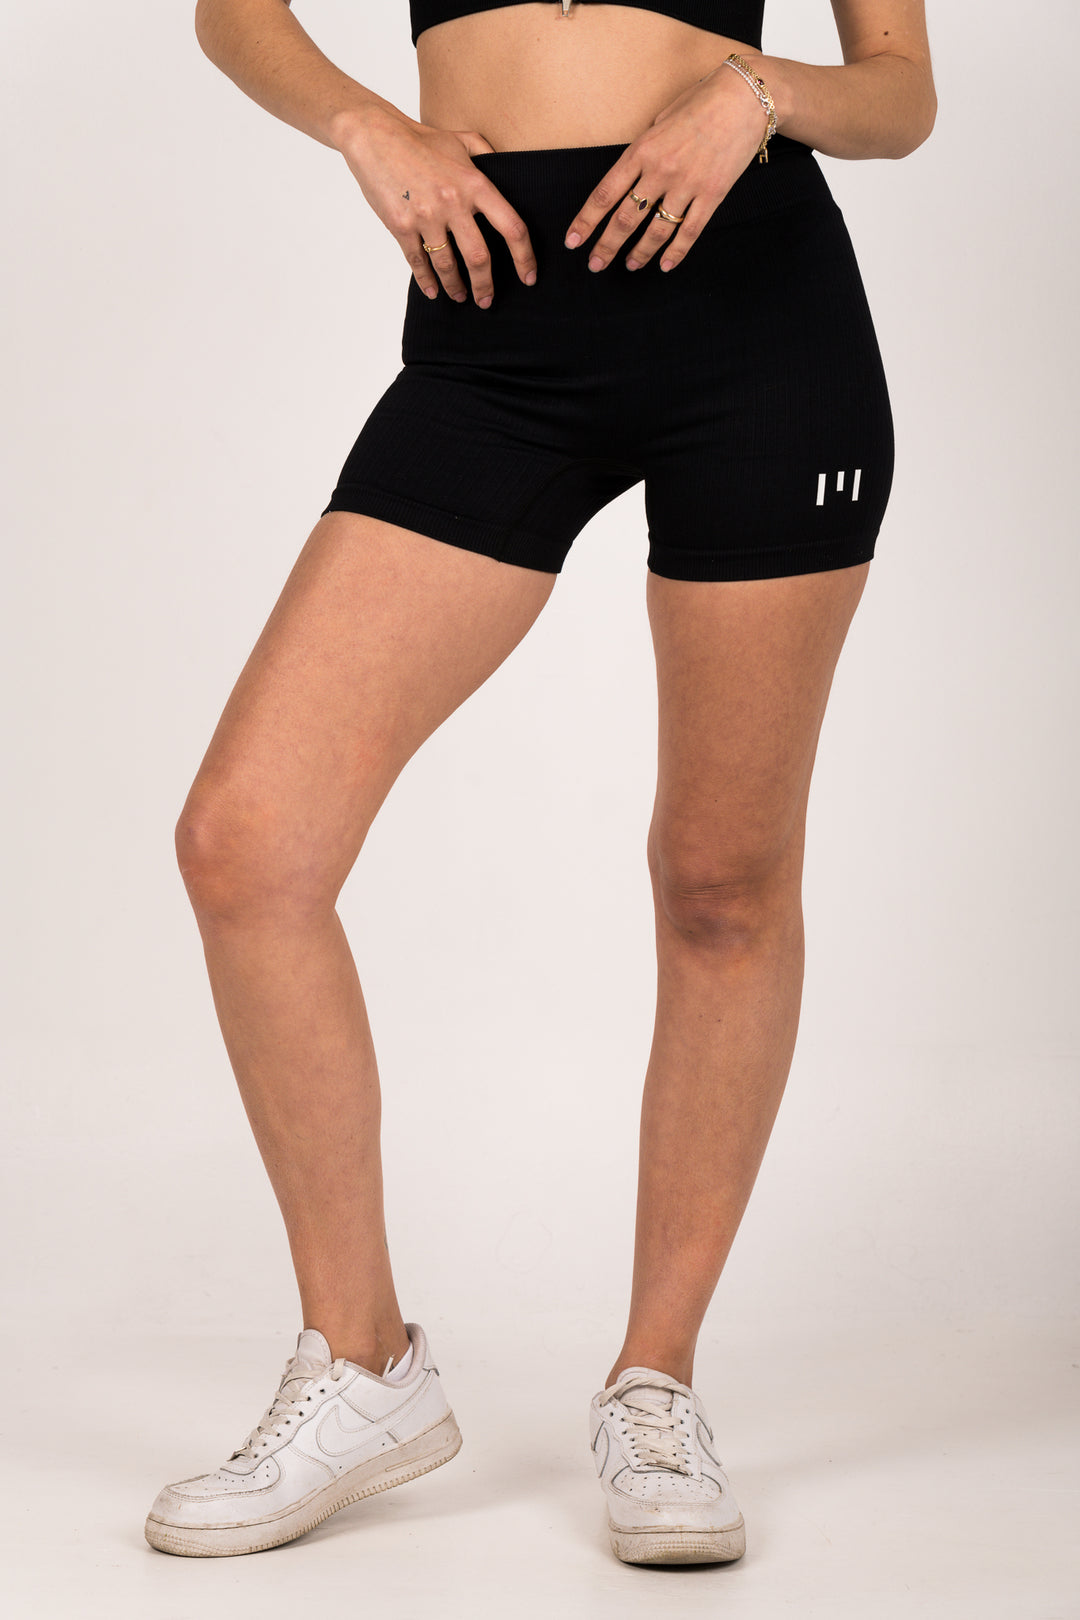 ✓ Shorts Deportivos para Mujer - Gym Lovers